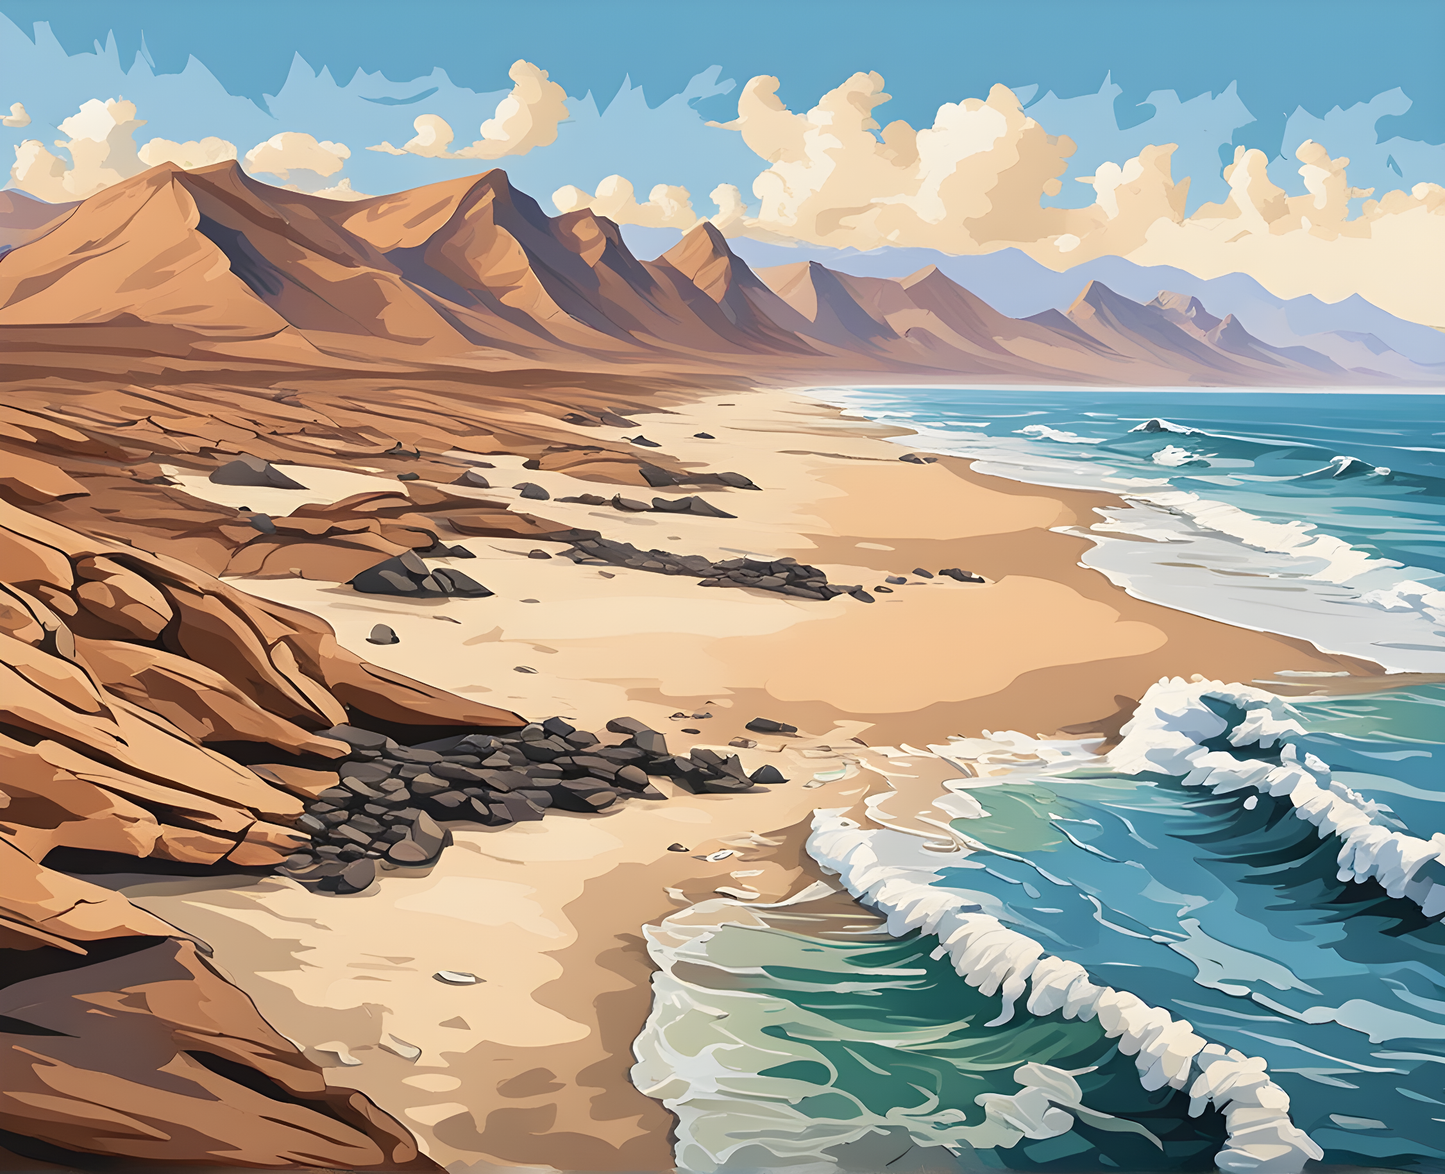 Amazing Places OD (467) - Skeleton Coast, Namibia - Van-Go Paint-By-Number Kit